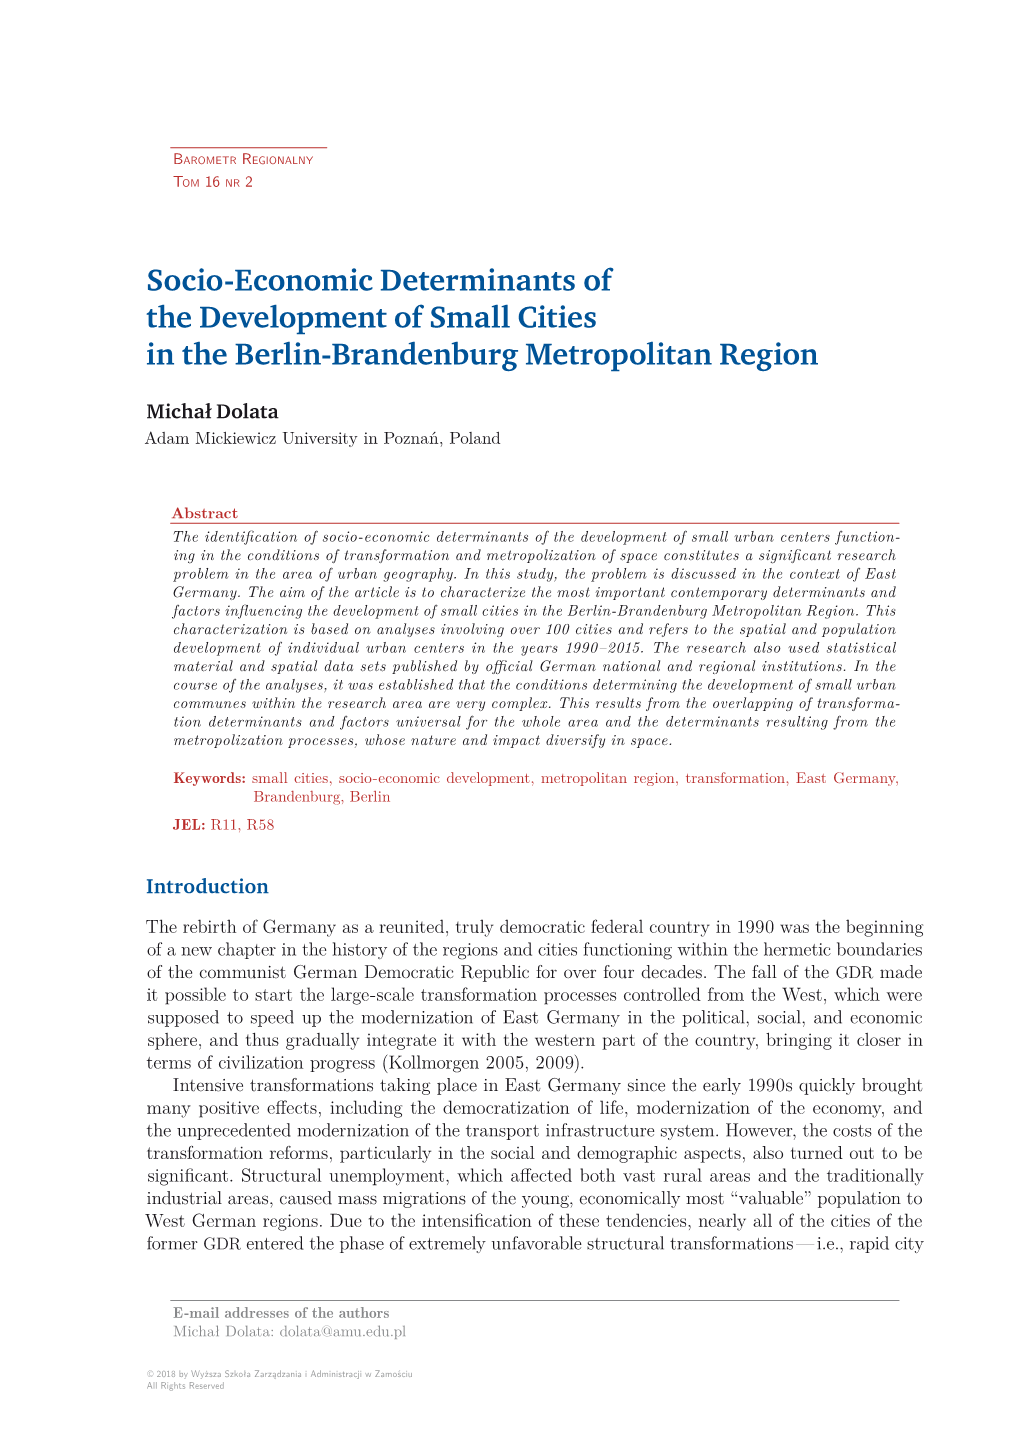 Socio-Economic Determinants of the Development of Small Cities in the Berlin-Brandenburg Metropolitan Region